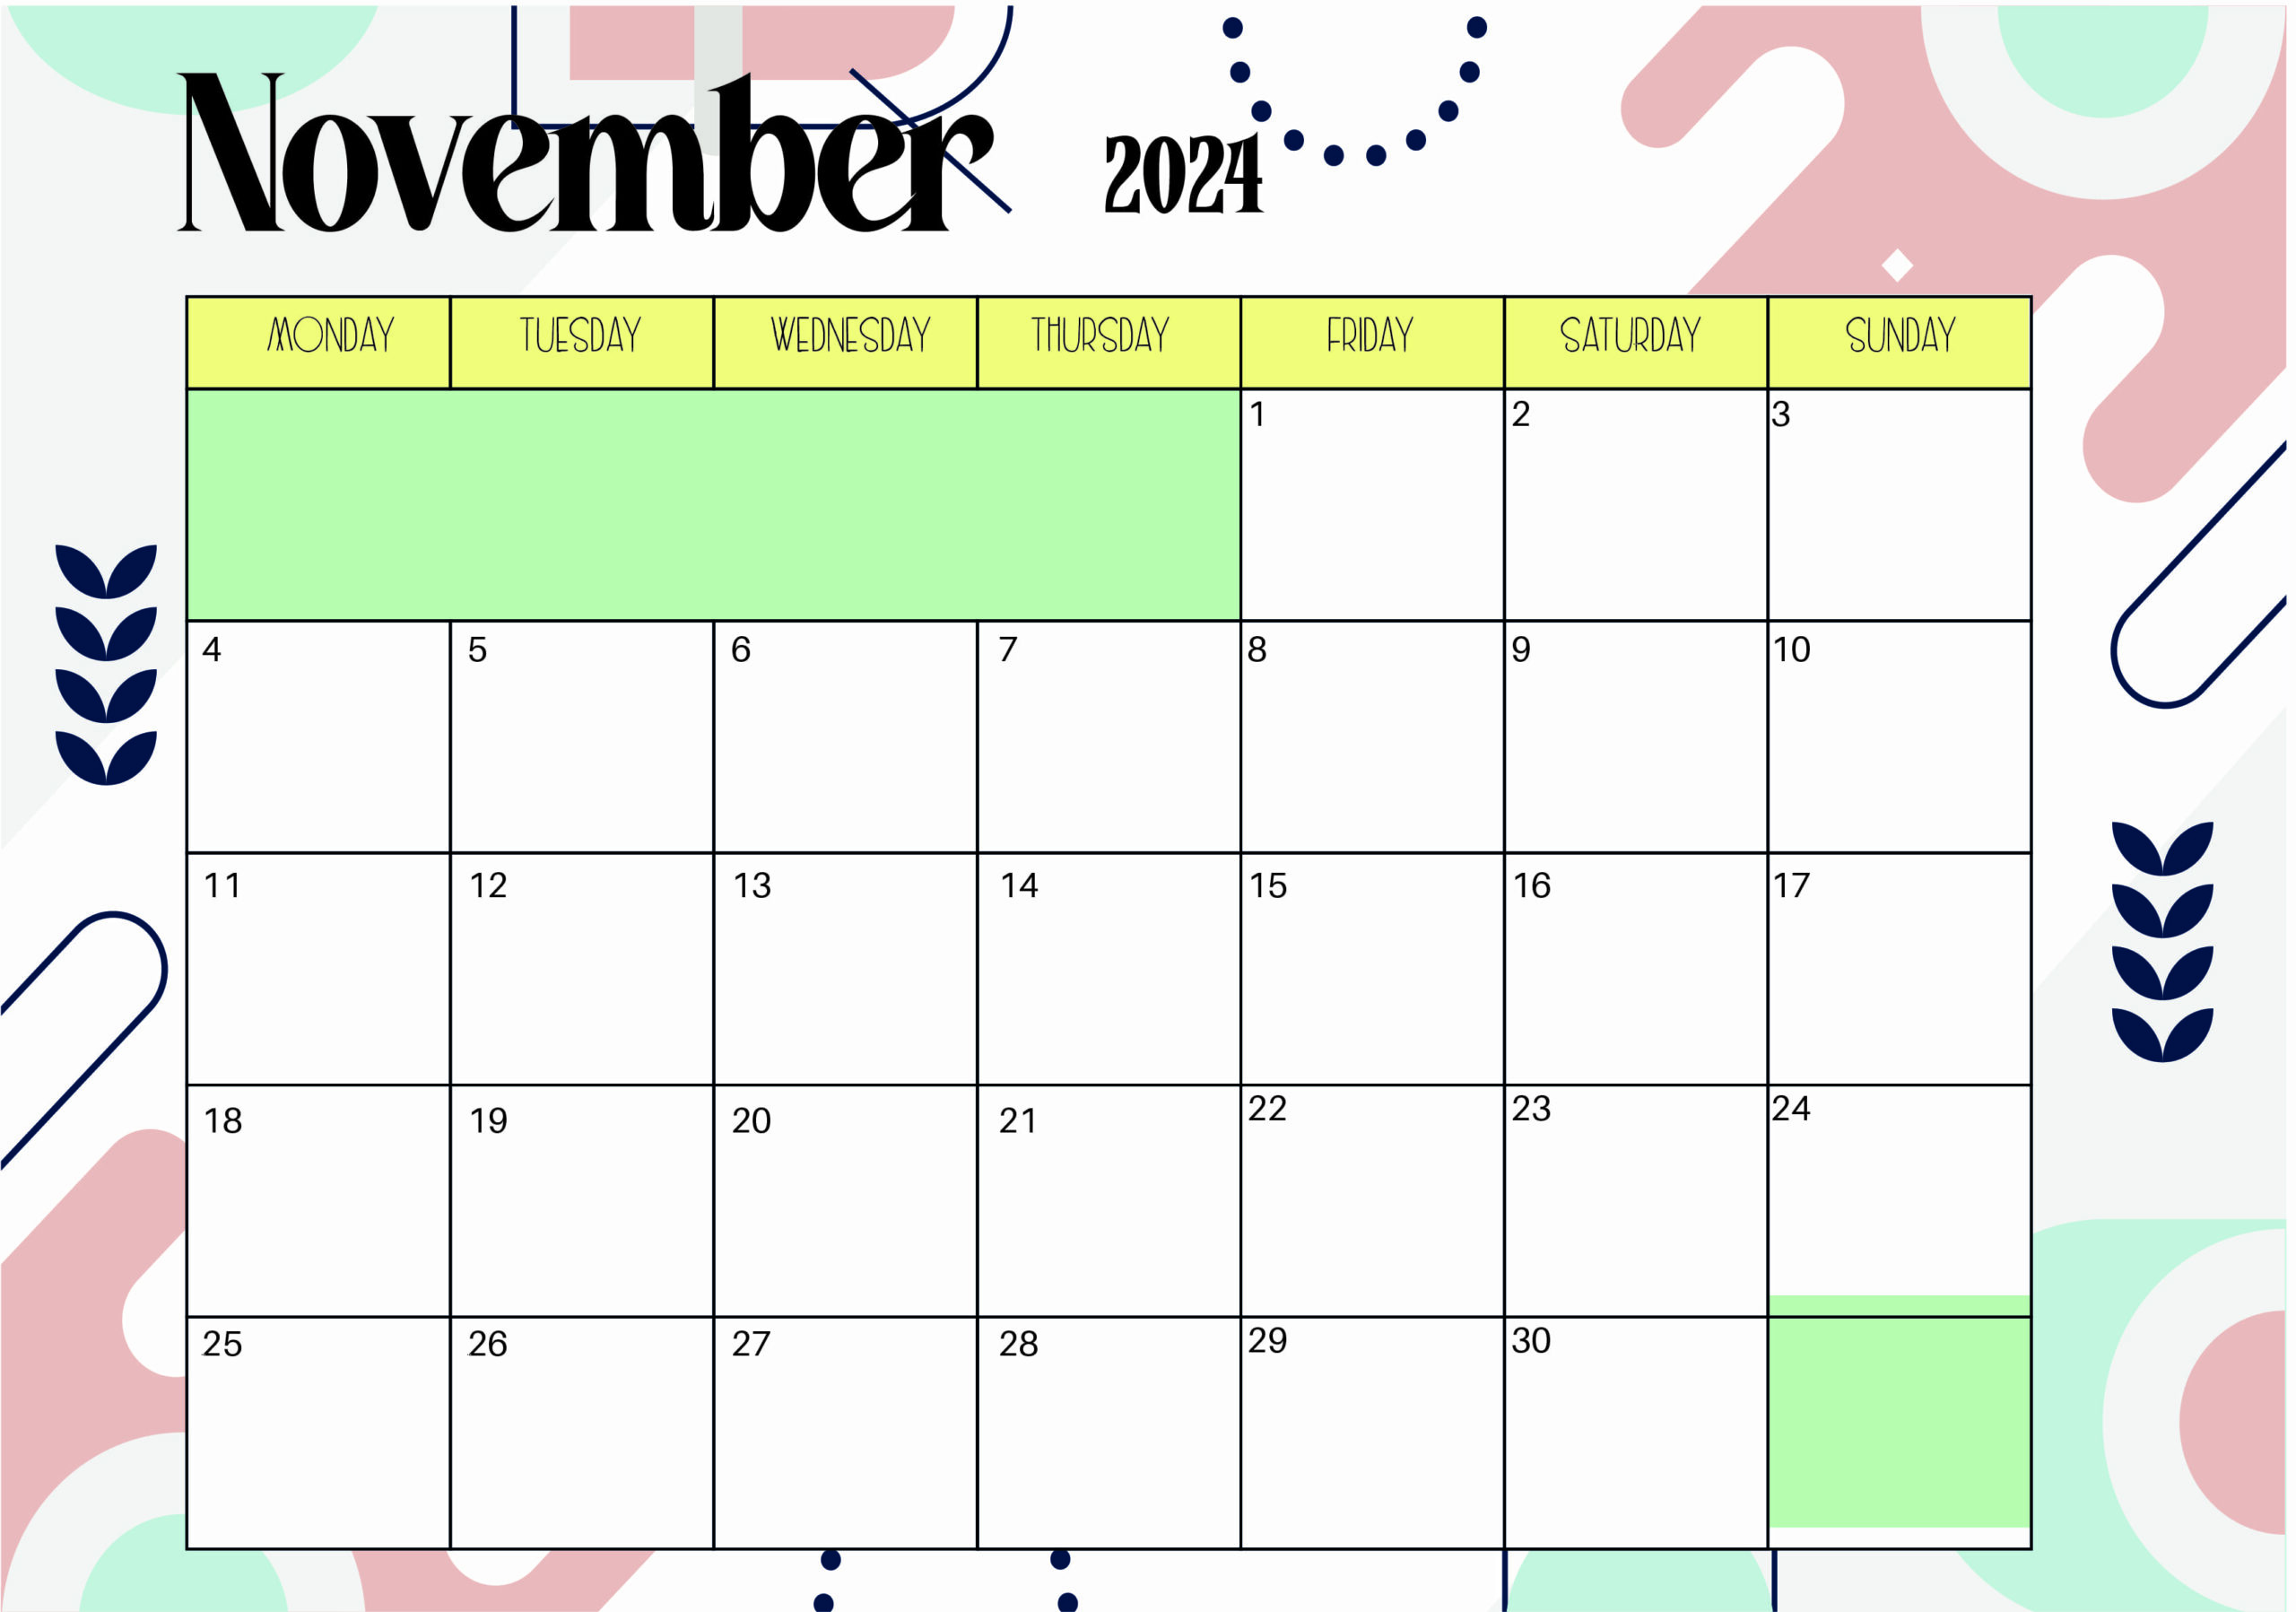 November 2024 Calendar for Printing